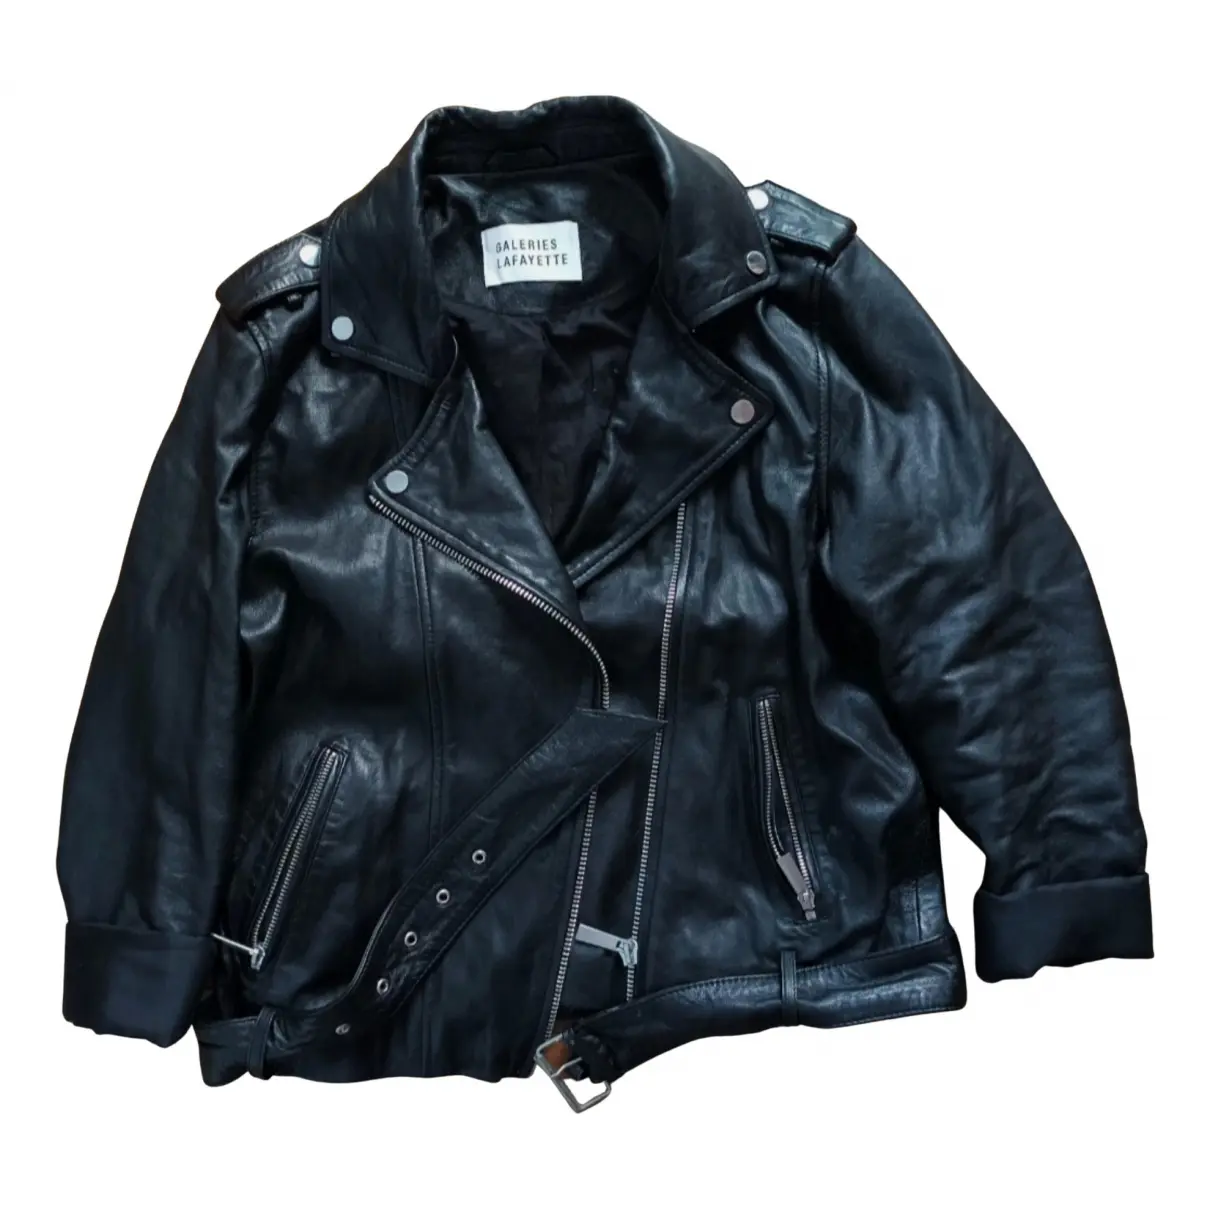 Leather jacket GALERIES LAFAYETTE